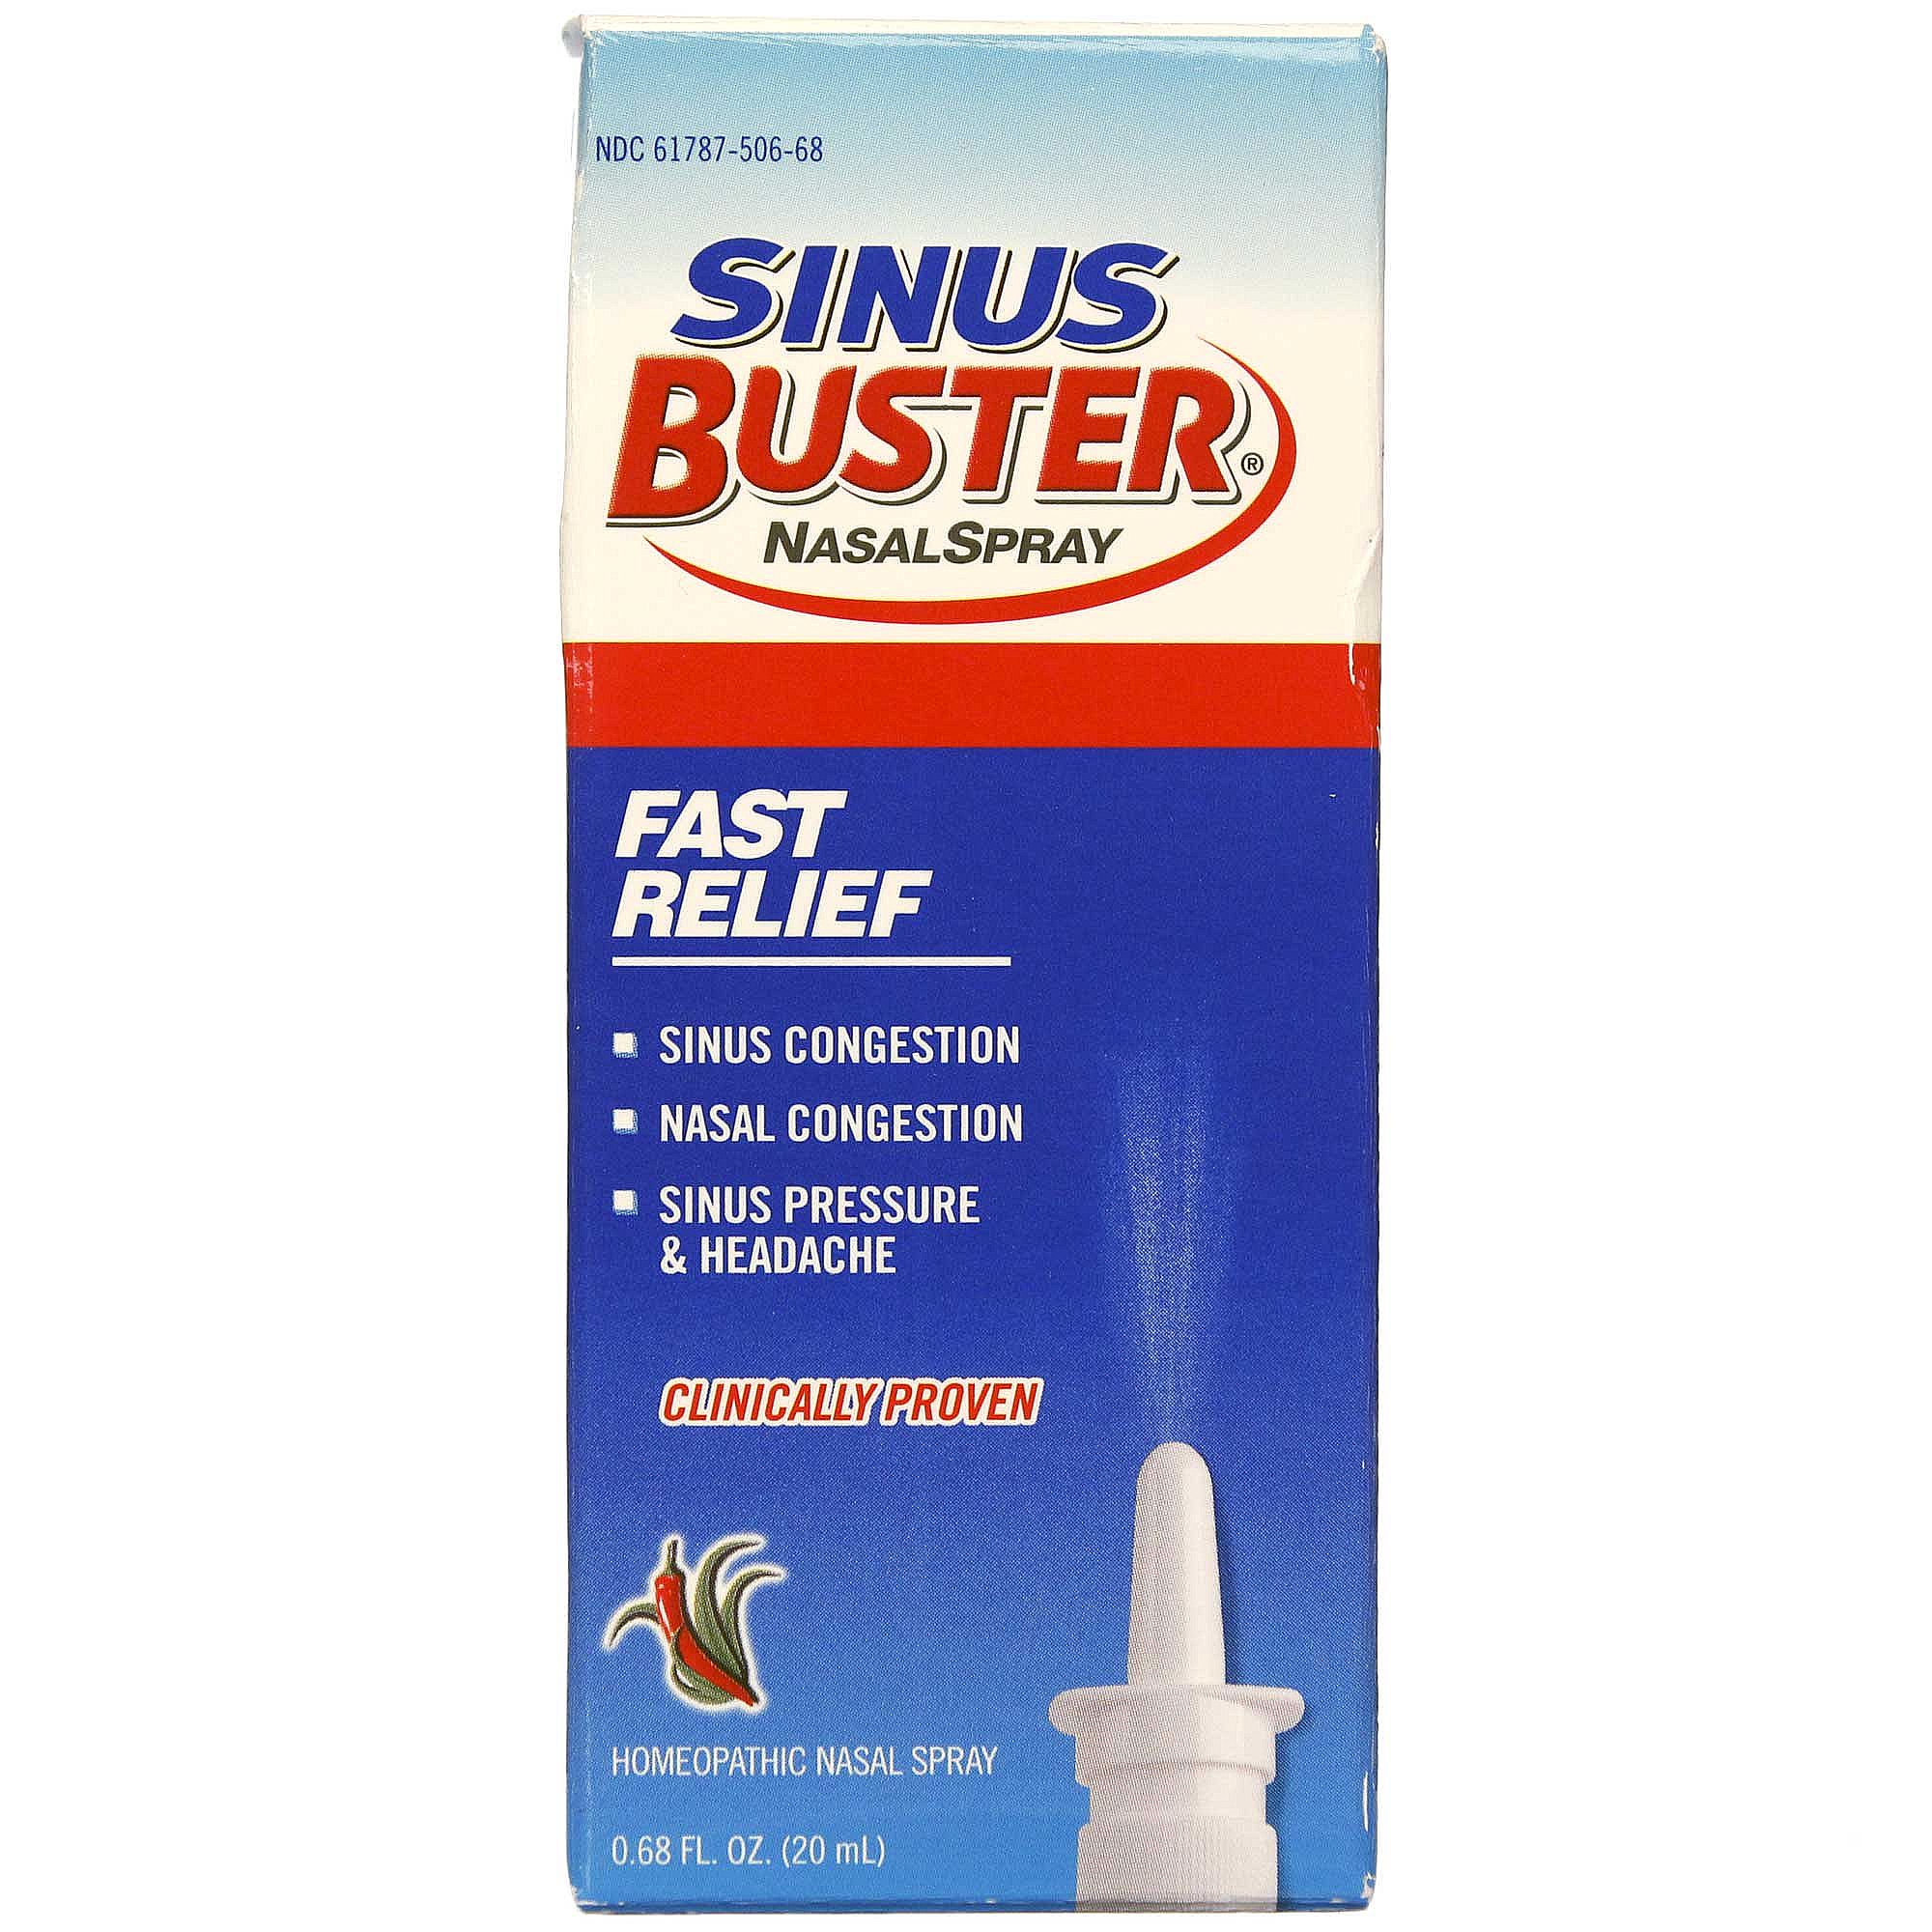 Nasal spray for sinus